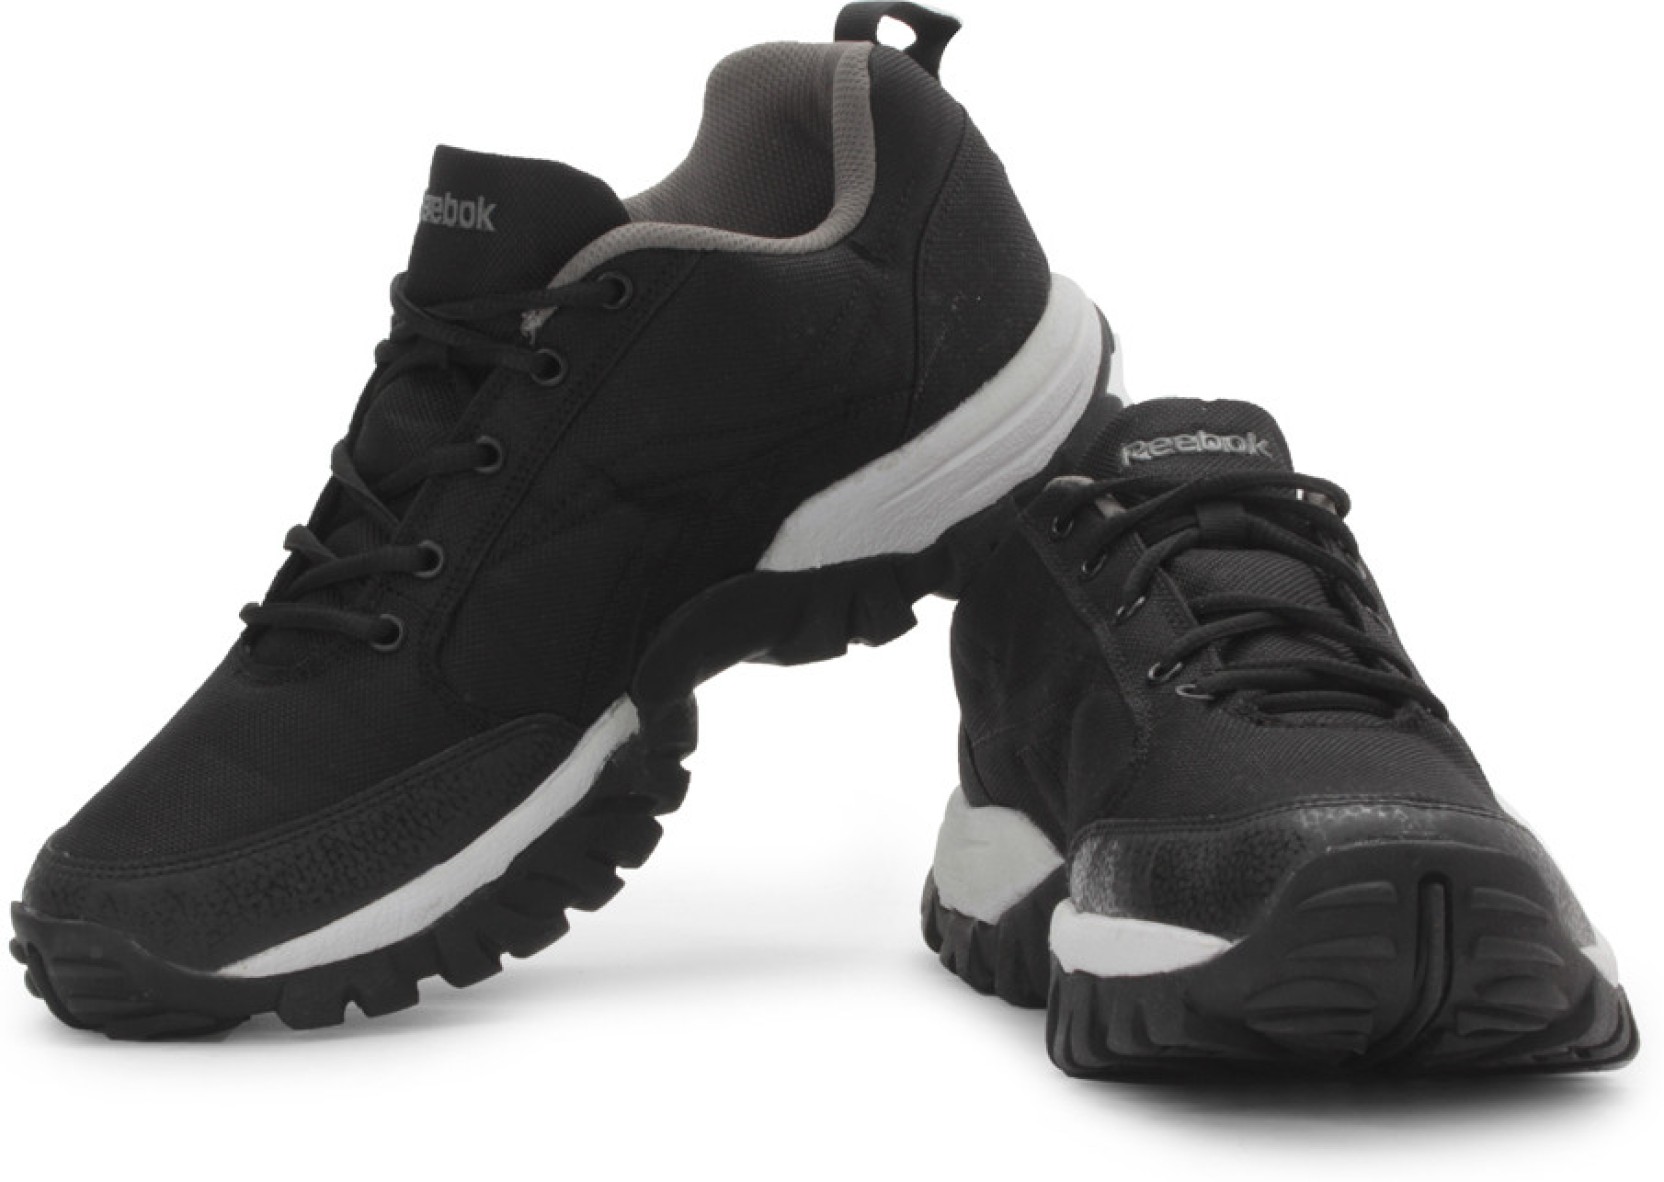 Reebok Reverse Smash Lp Men Outdoors Shoes - Buy Black, Grey Color ...